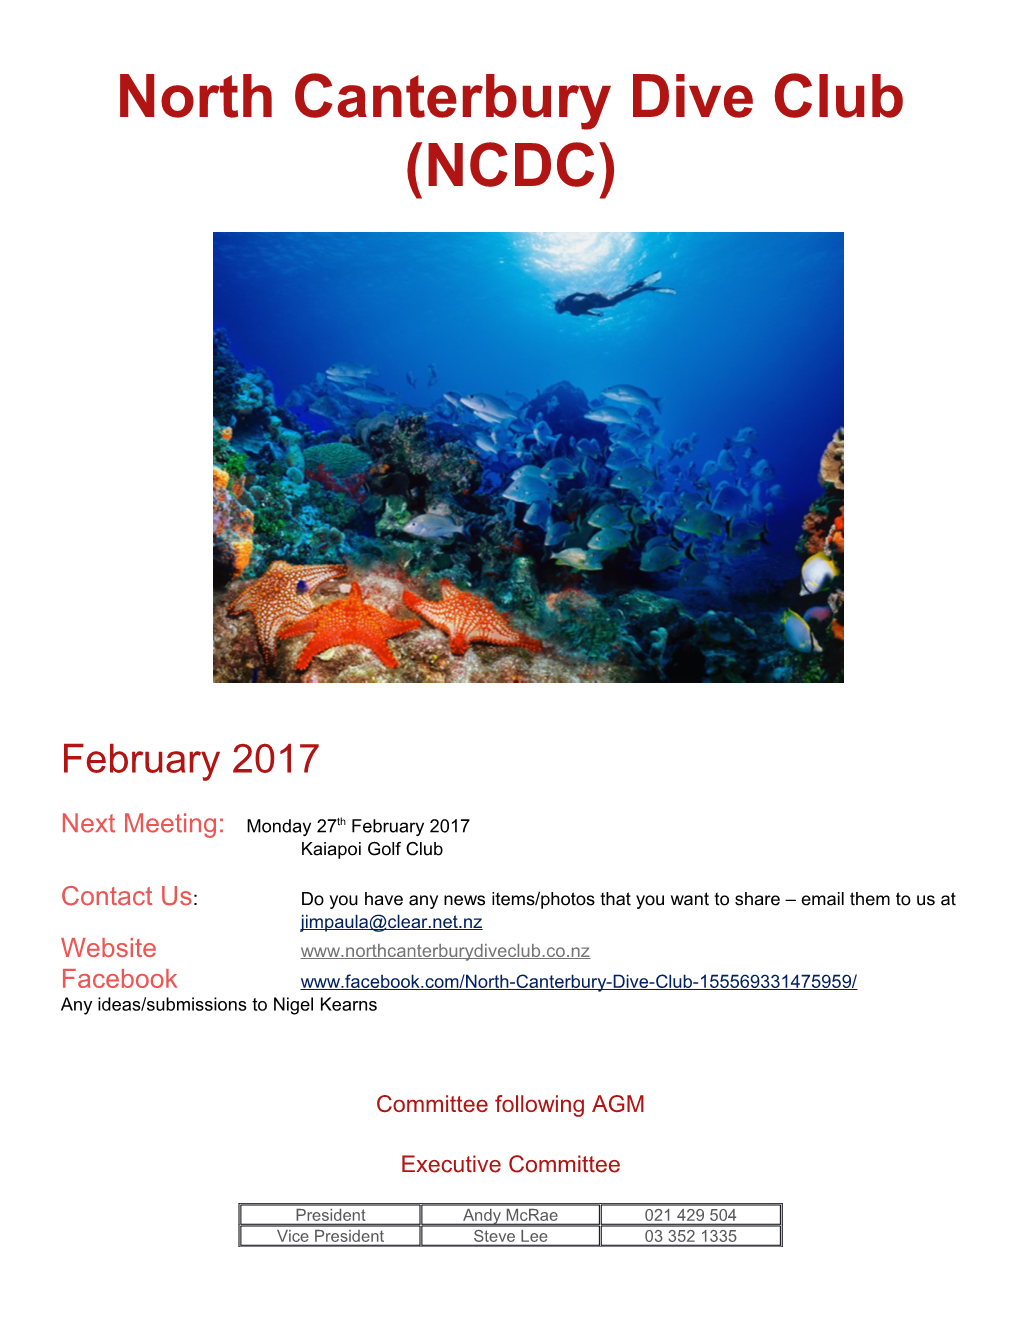 North Canterbury Dive Club (NCDC)